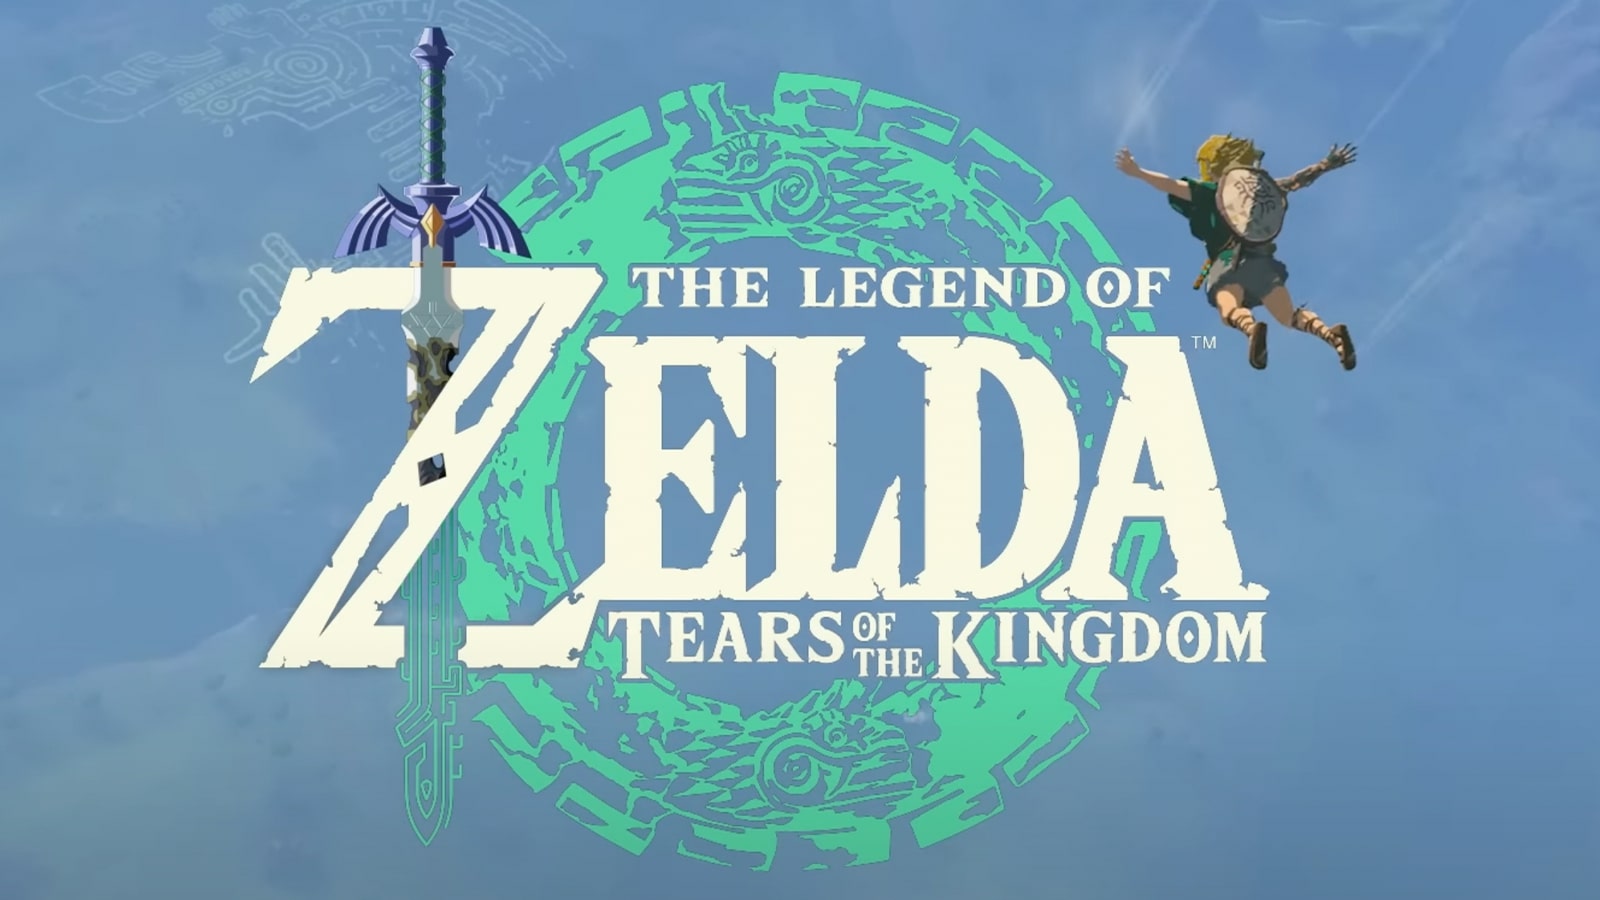 Zelda Tränen des Kingdom -Logos